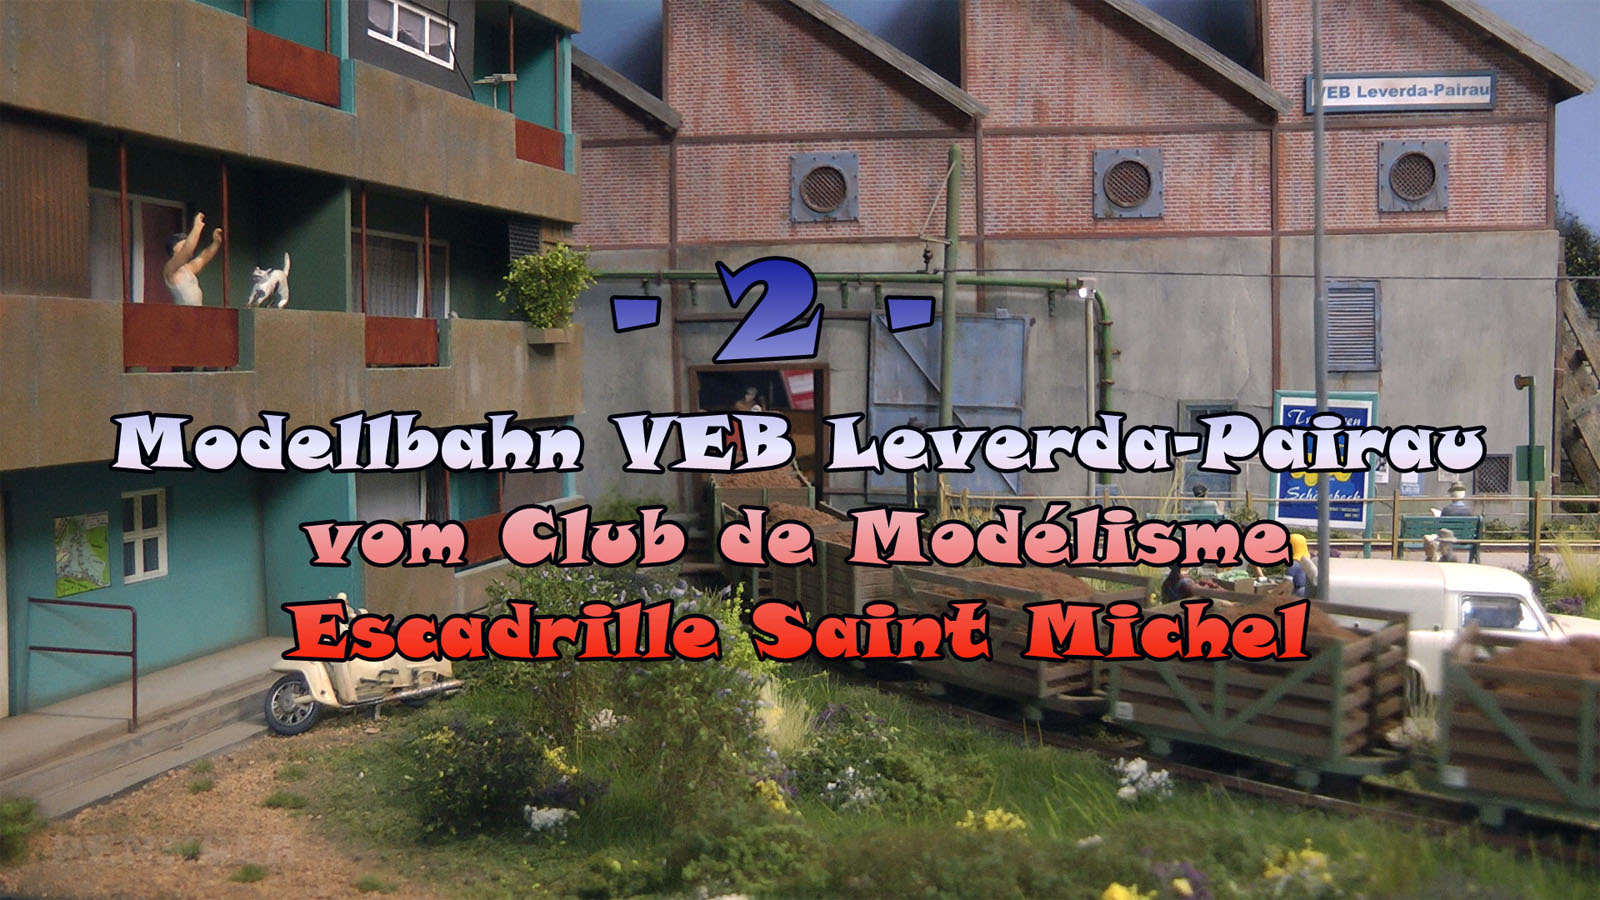 Modellbahn VEB Leverda-Pairau vom Club de Modélisme Escadrille Saint Michel